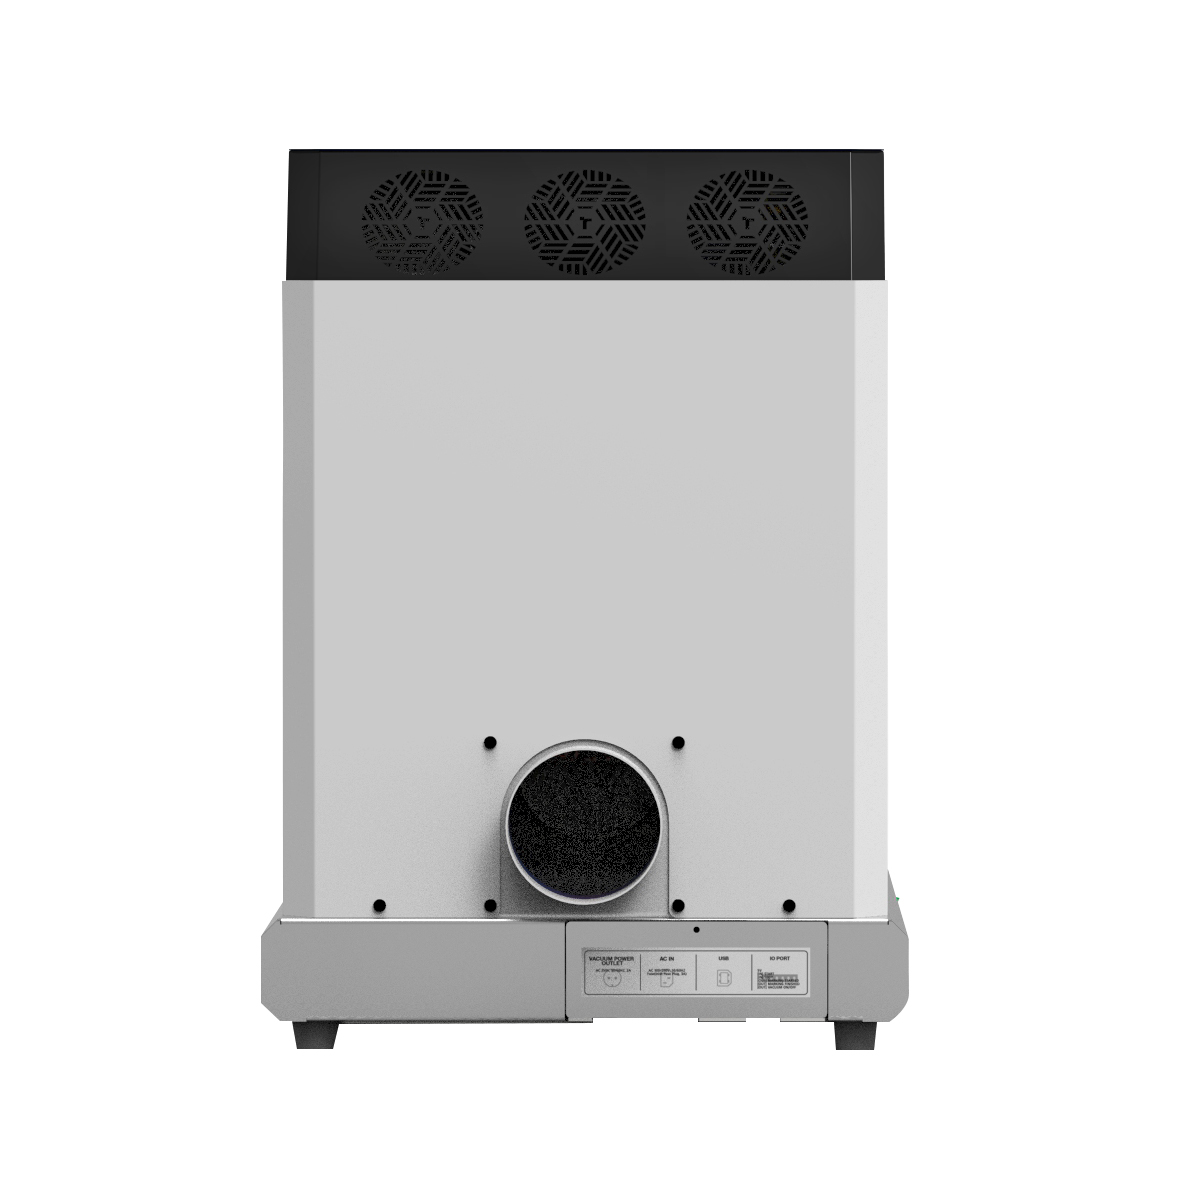 Lasermarkering machine Magic-L3 100W met geïntegreerde camera en autofocus